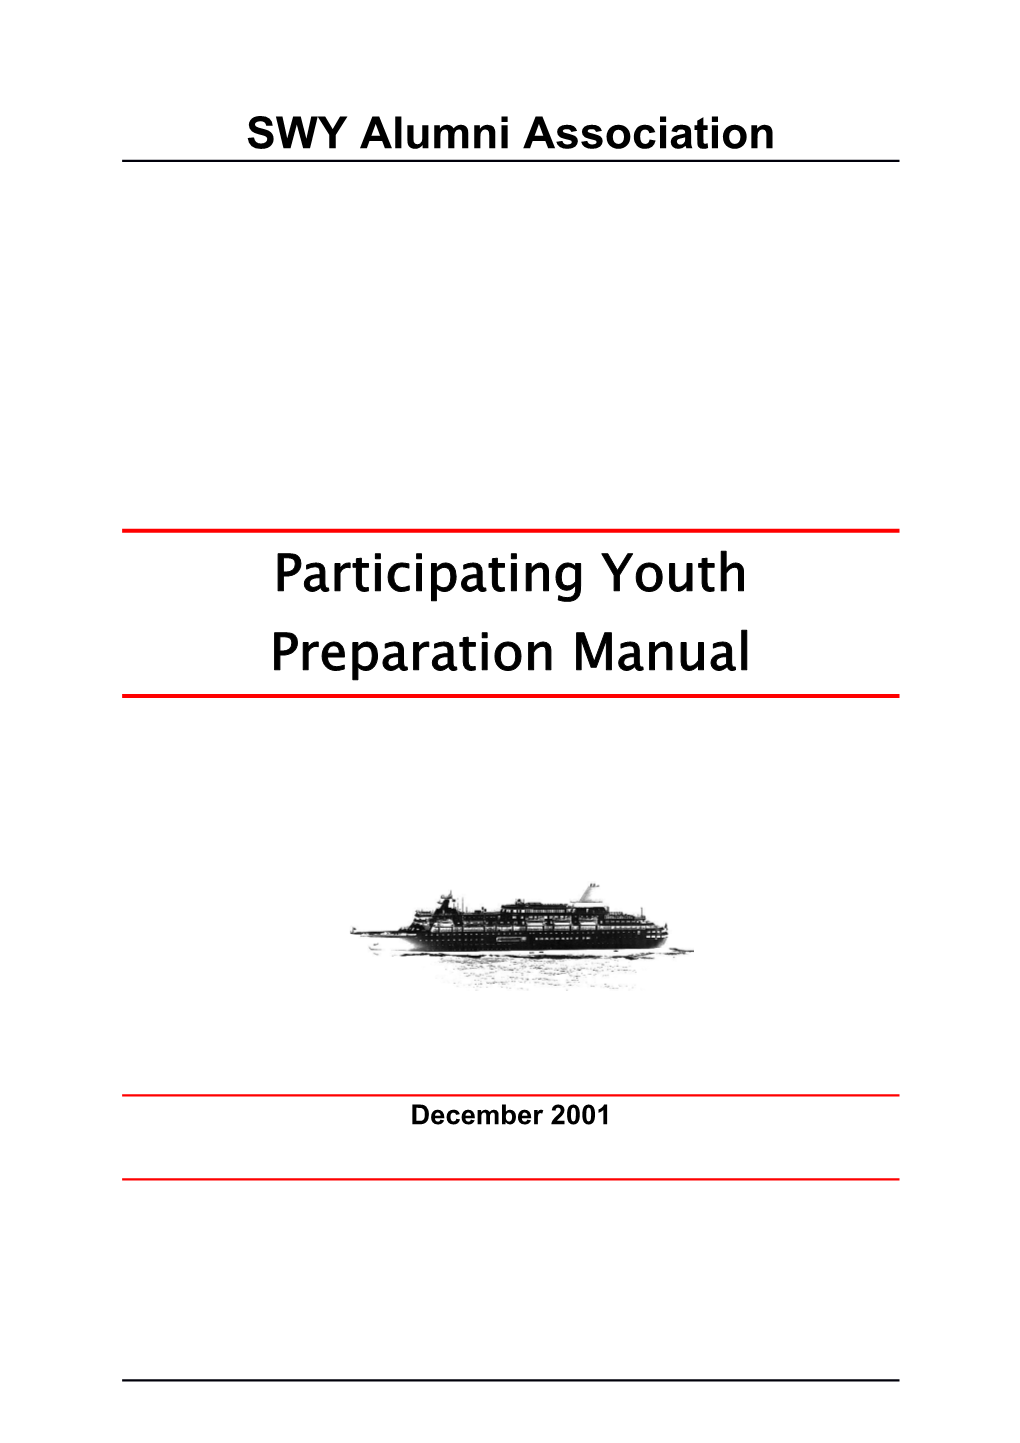 Participating Youth Preparation Manual